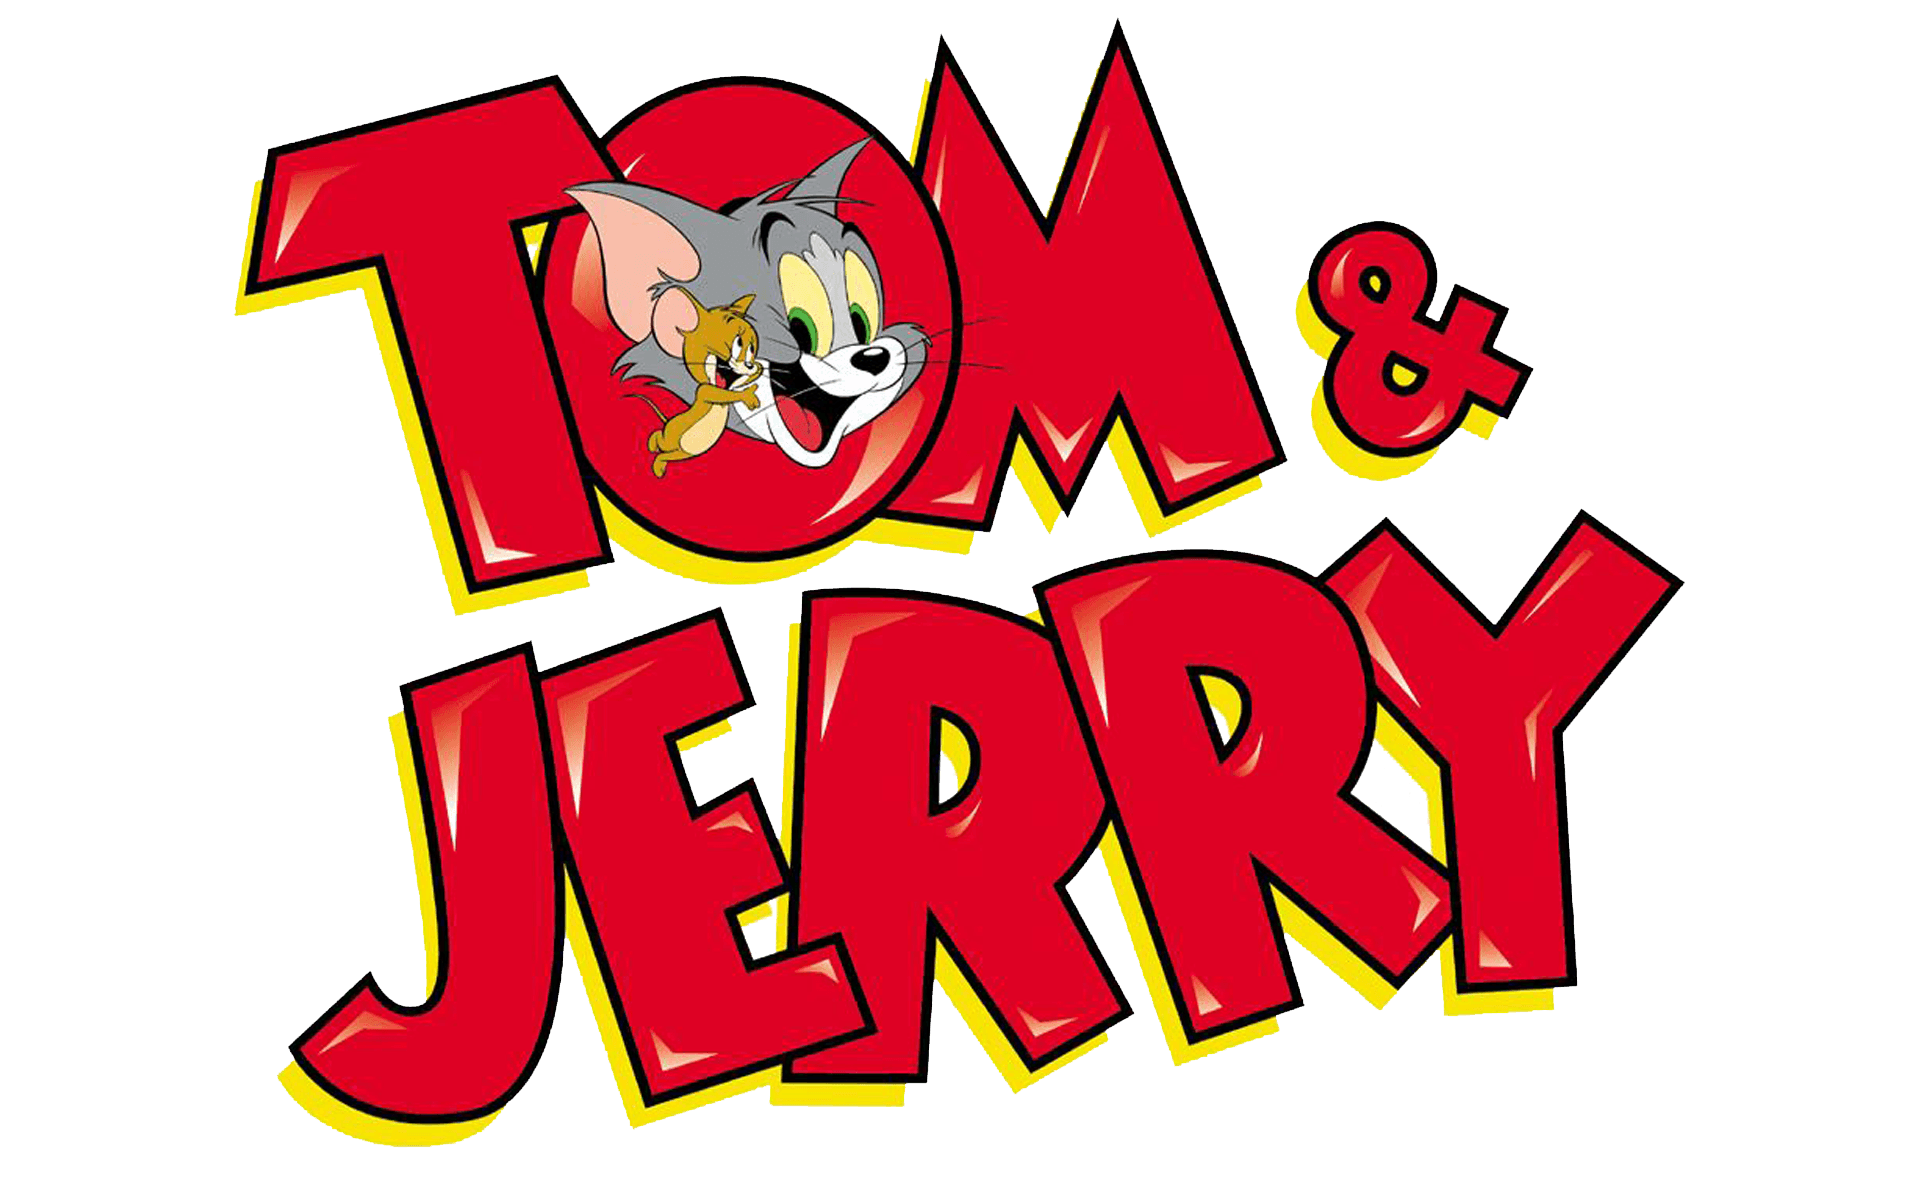 Jerry Logo - Tom And Jerry Cartoon Logo PNG Image - PurePNG | Free transparent ...